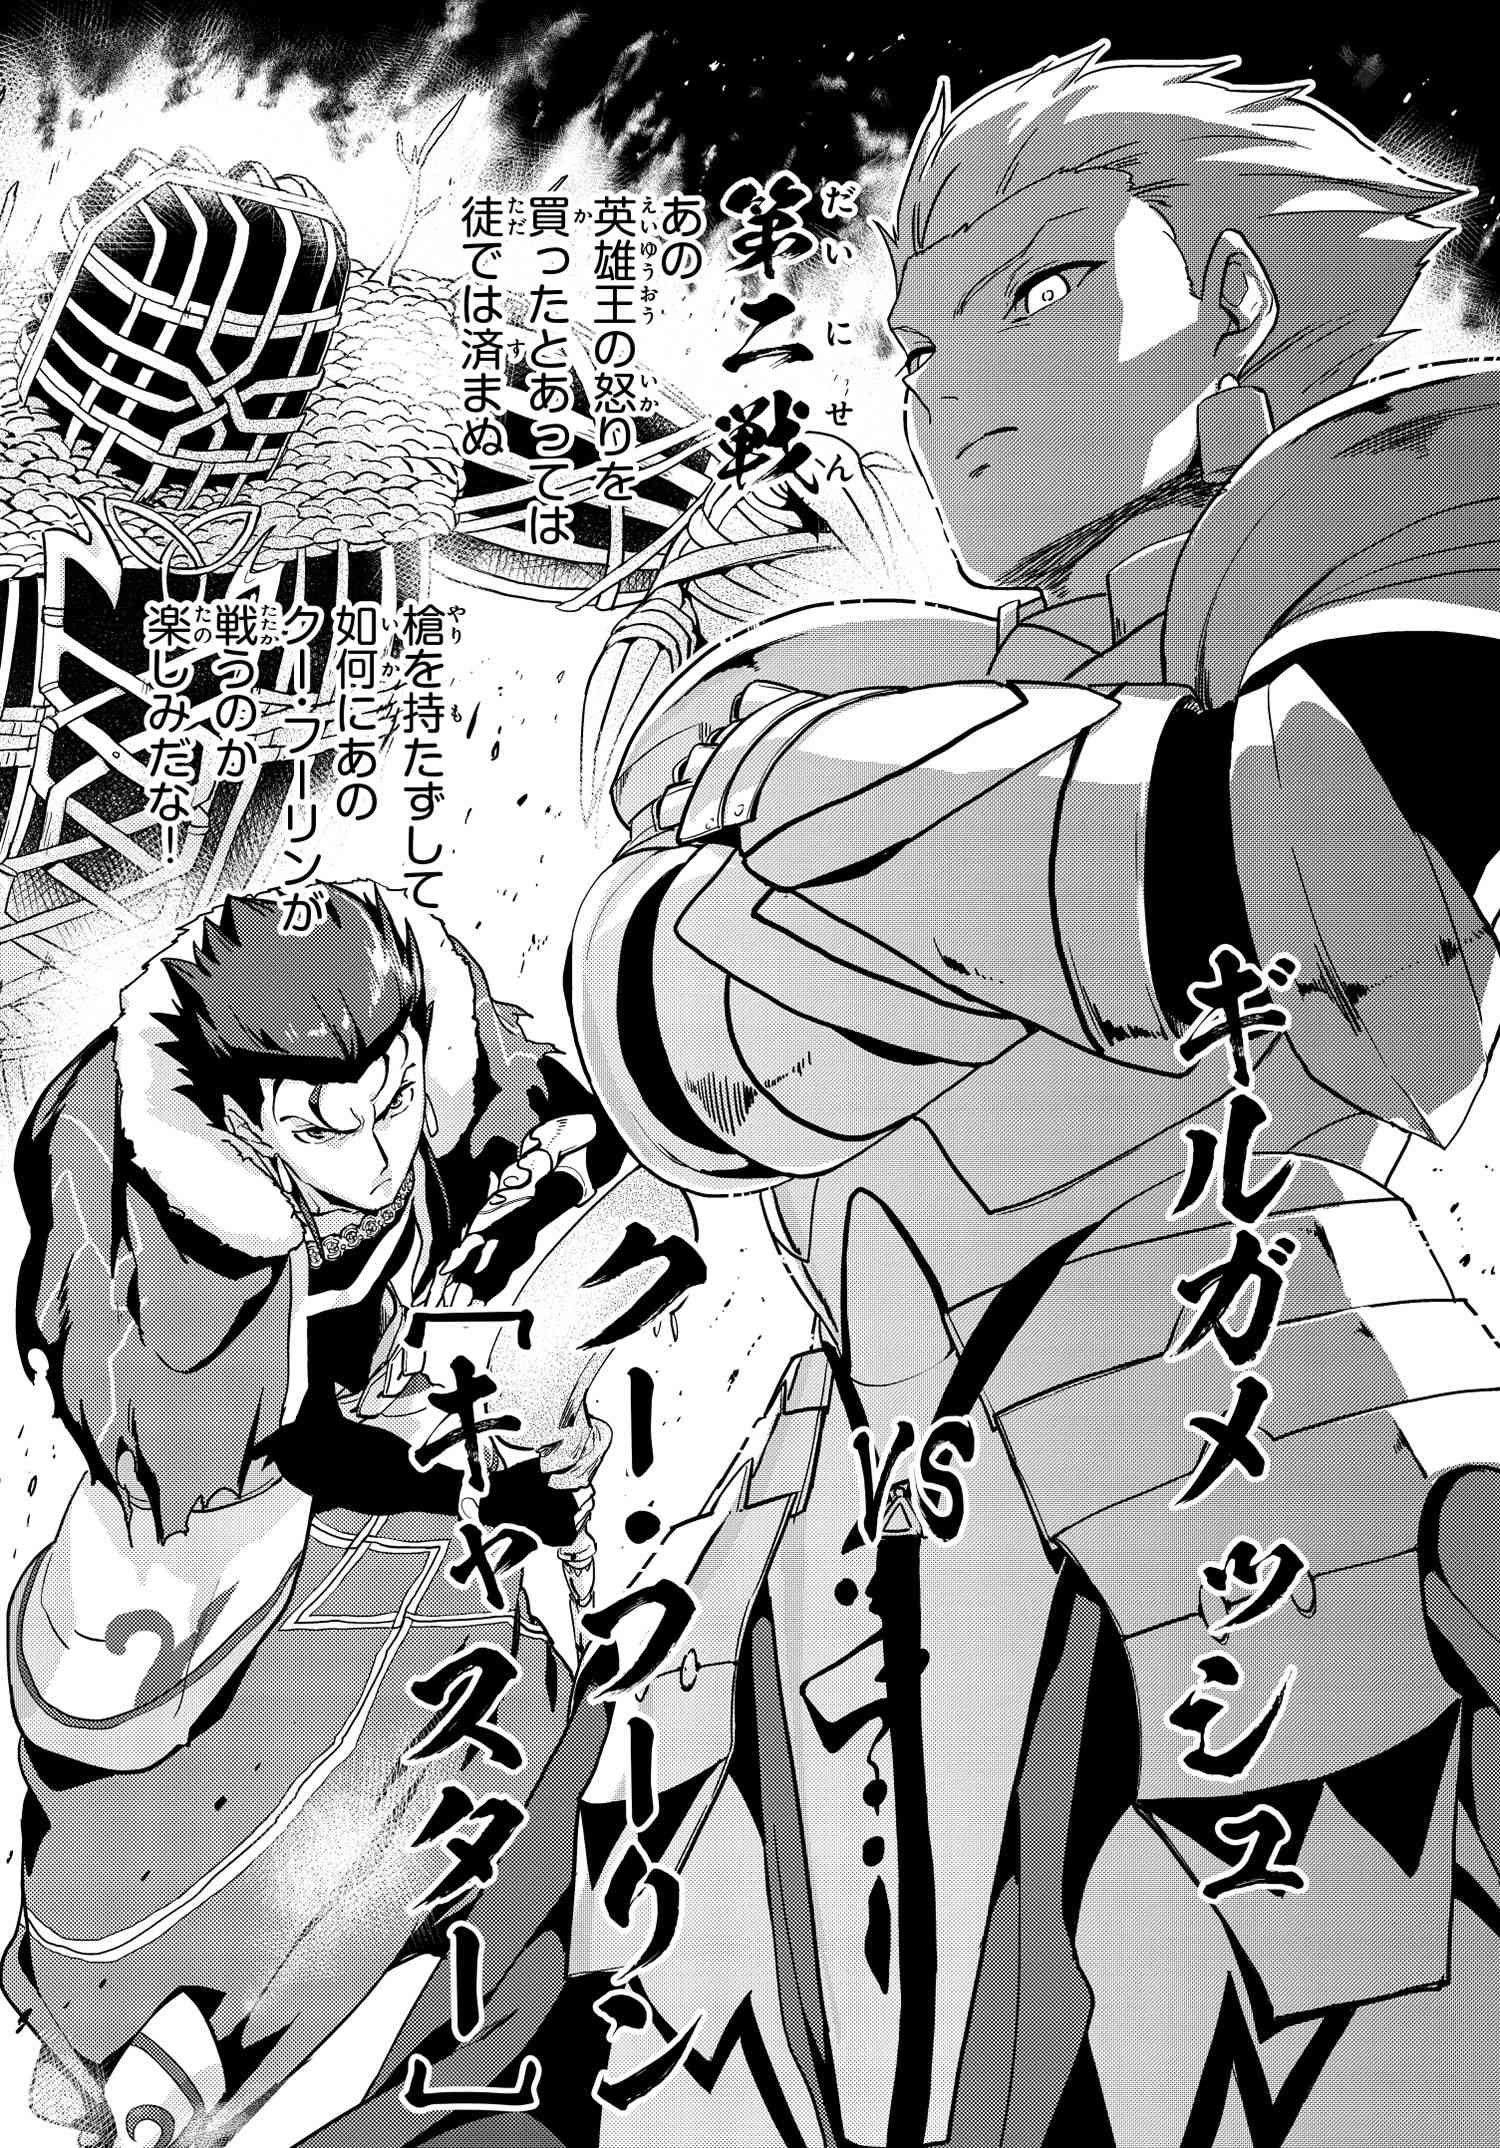 Fate Grand Order コミックアラカルト Plus Sp 対決編 序 漫画 青葉時雨 Type Moonコミックエース 無料で漫画が読めるオンラインマガジン